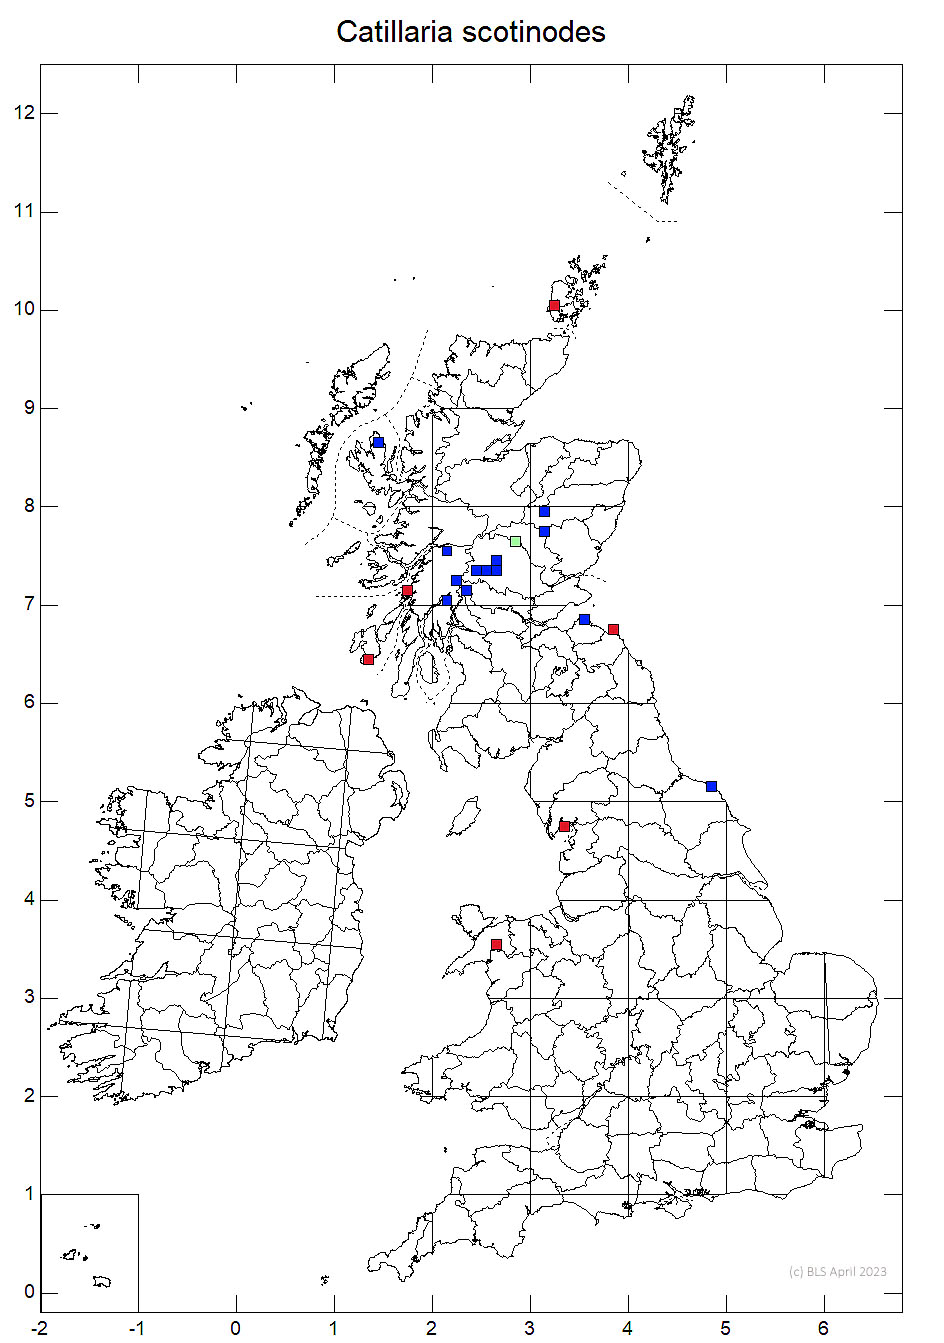 Catillaria scotinodes 10km sq distribution map